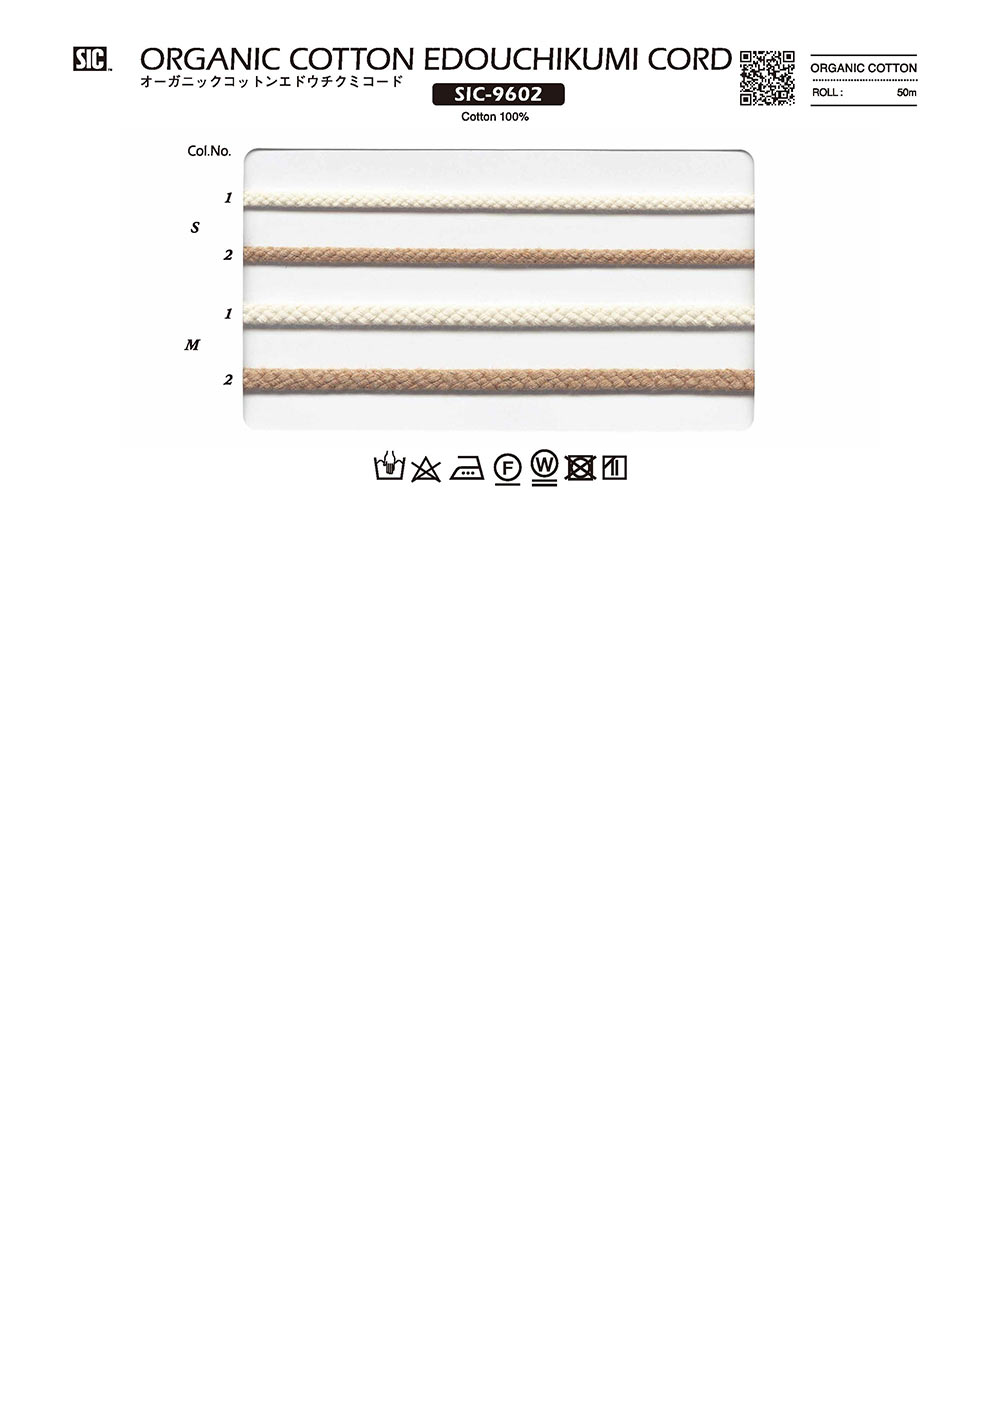 SIC-9602 Organic Cotton Edouchiku Cord[Ribbon Tape Cord] SHINDO(SIC)